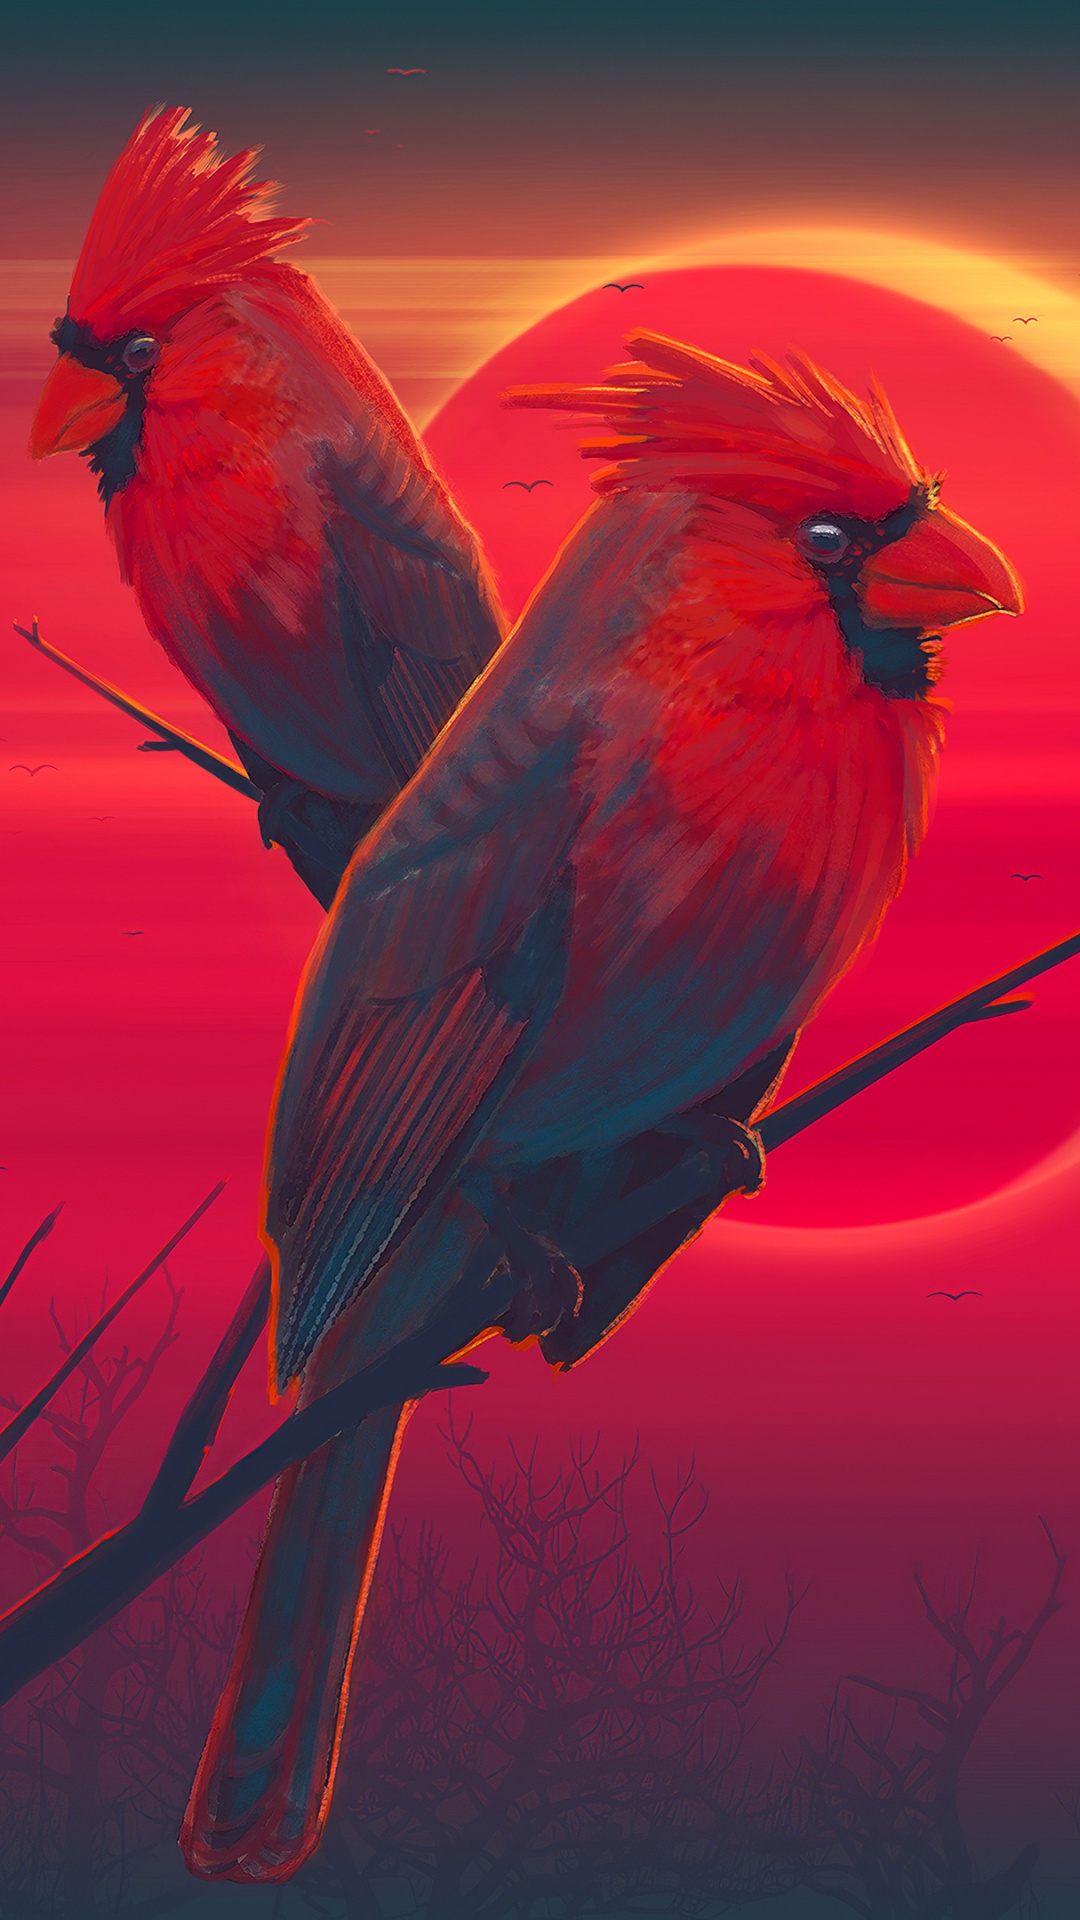 Red Bird on Brown Stick. Wallpaper in 1080x1920 Resolution